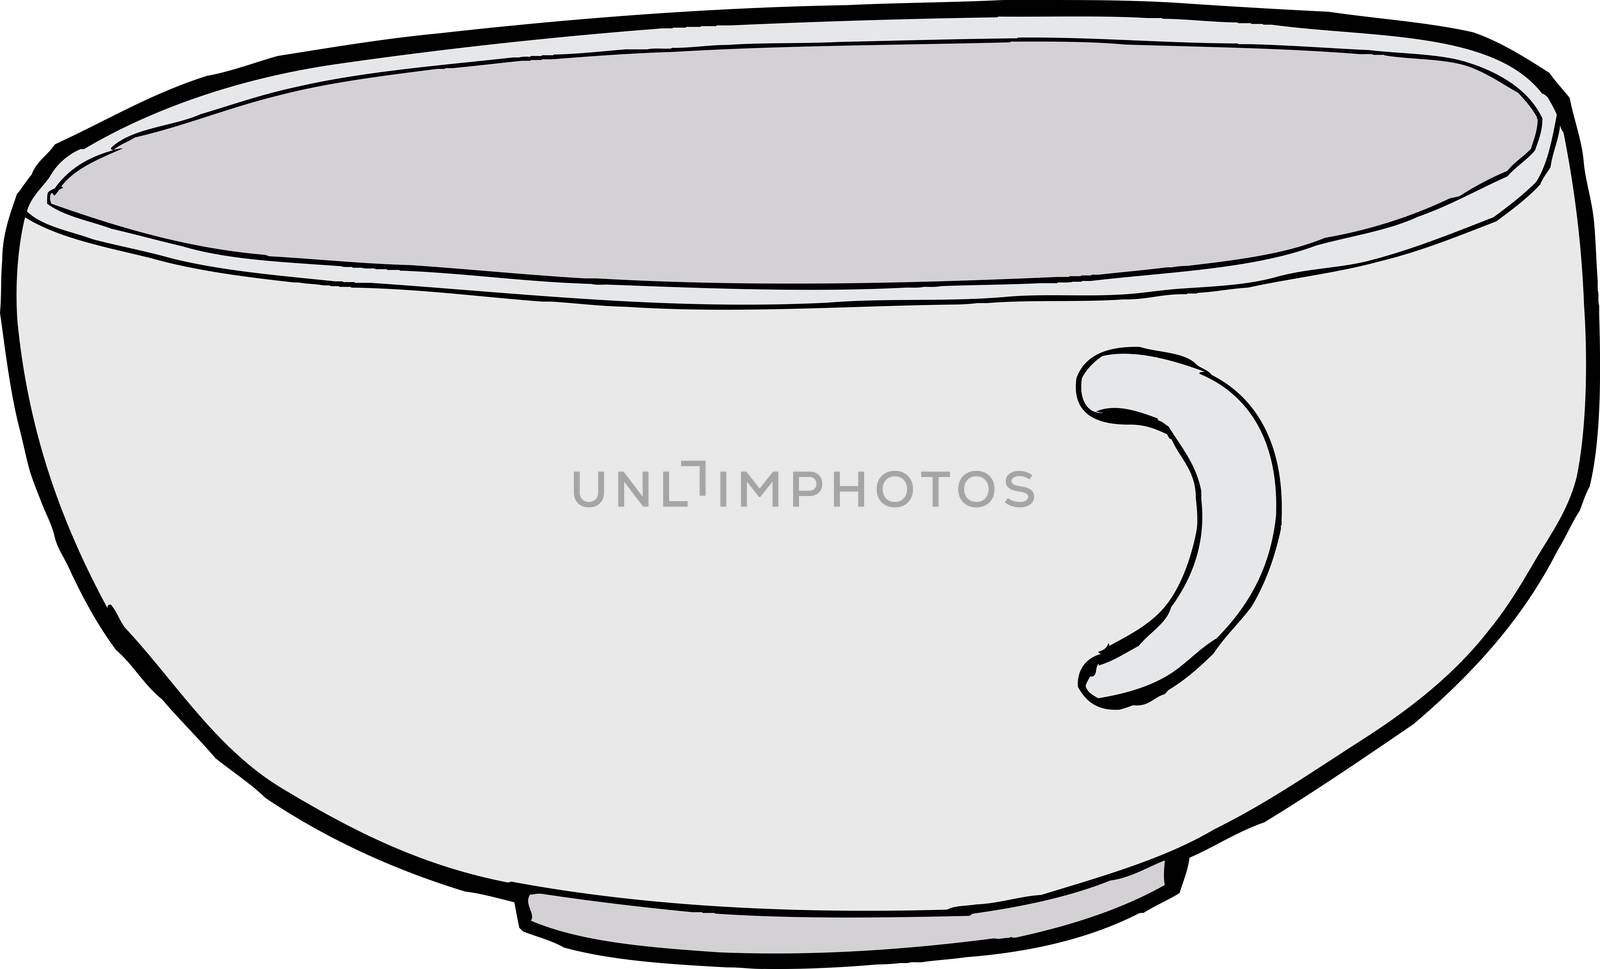 Single empty teacup illustration over white background